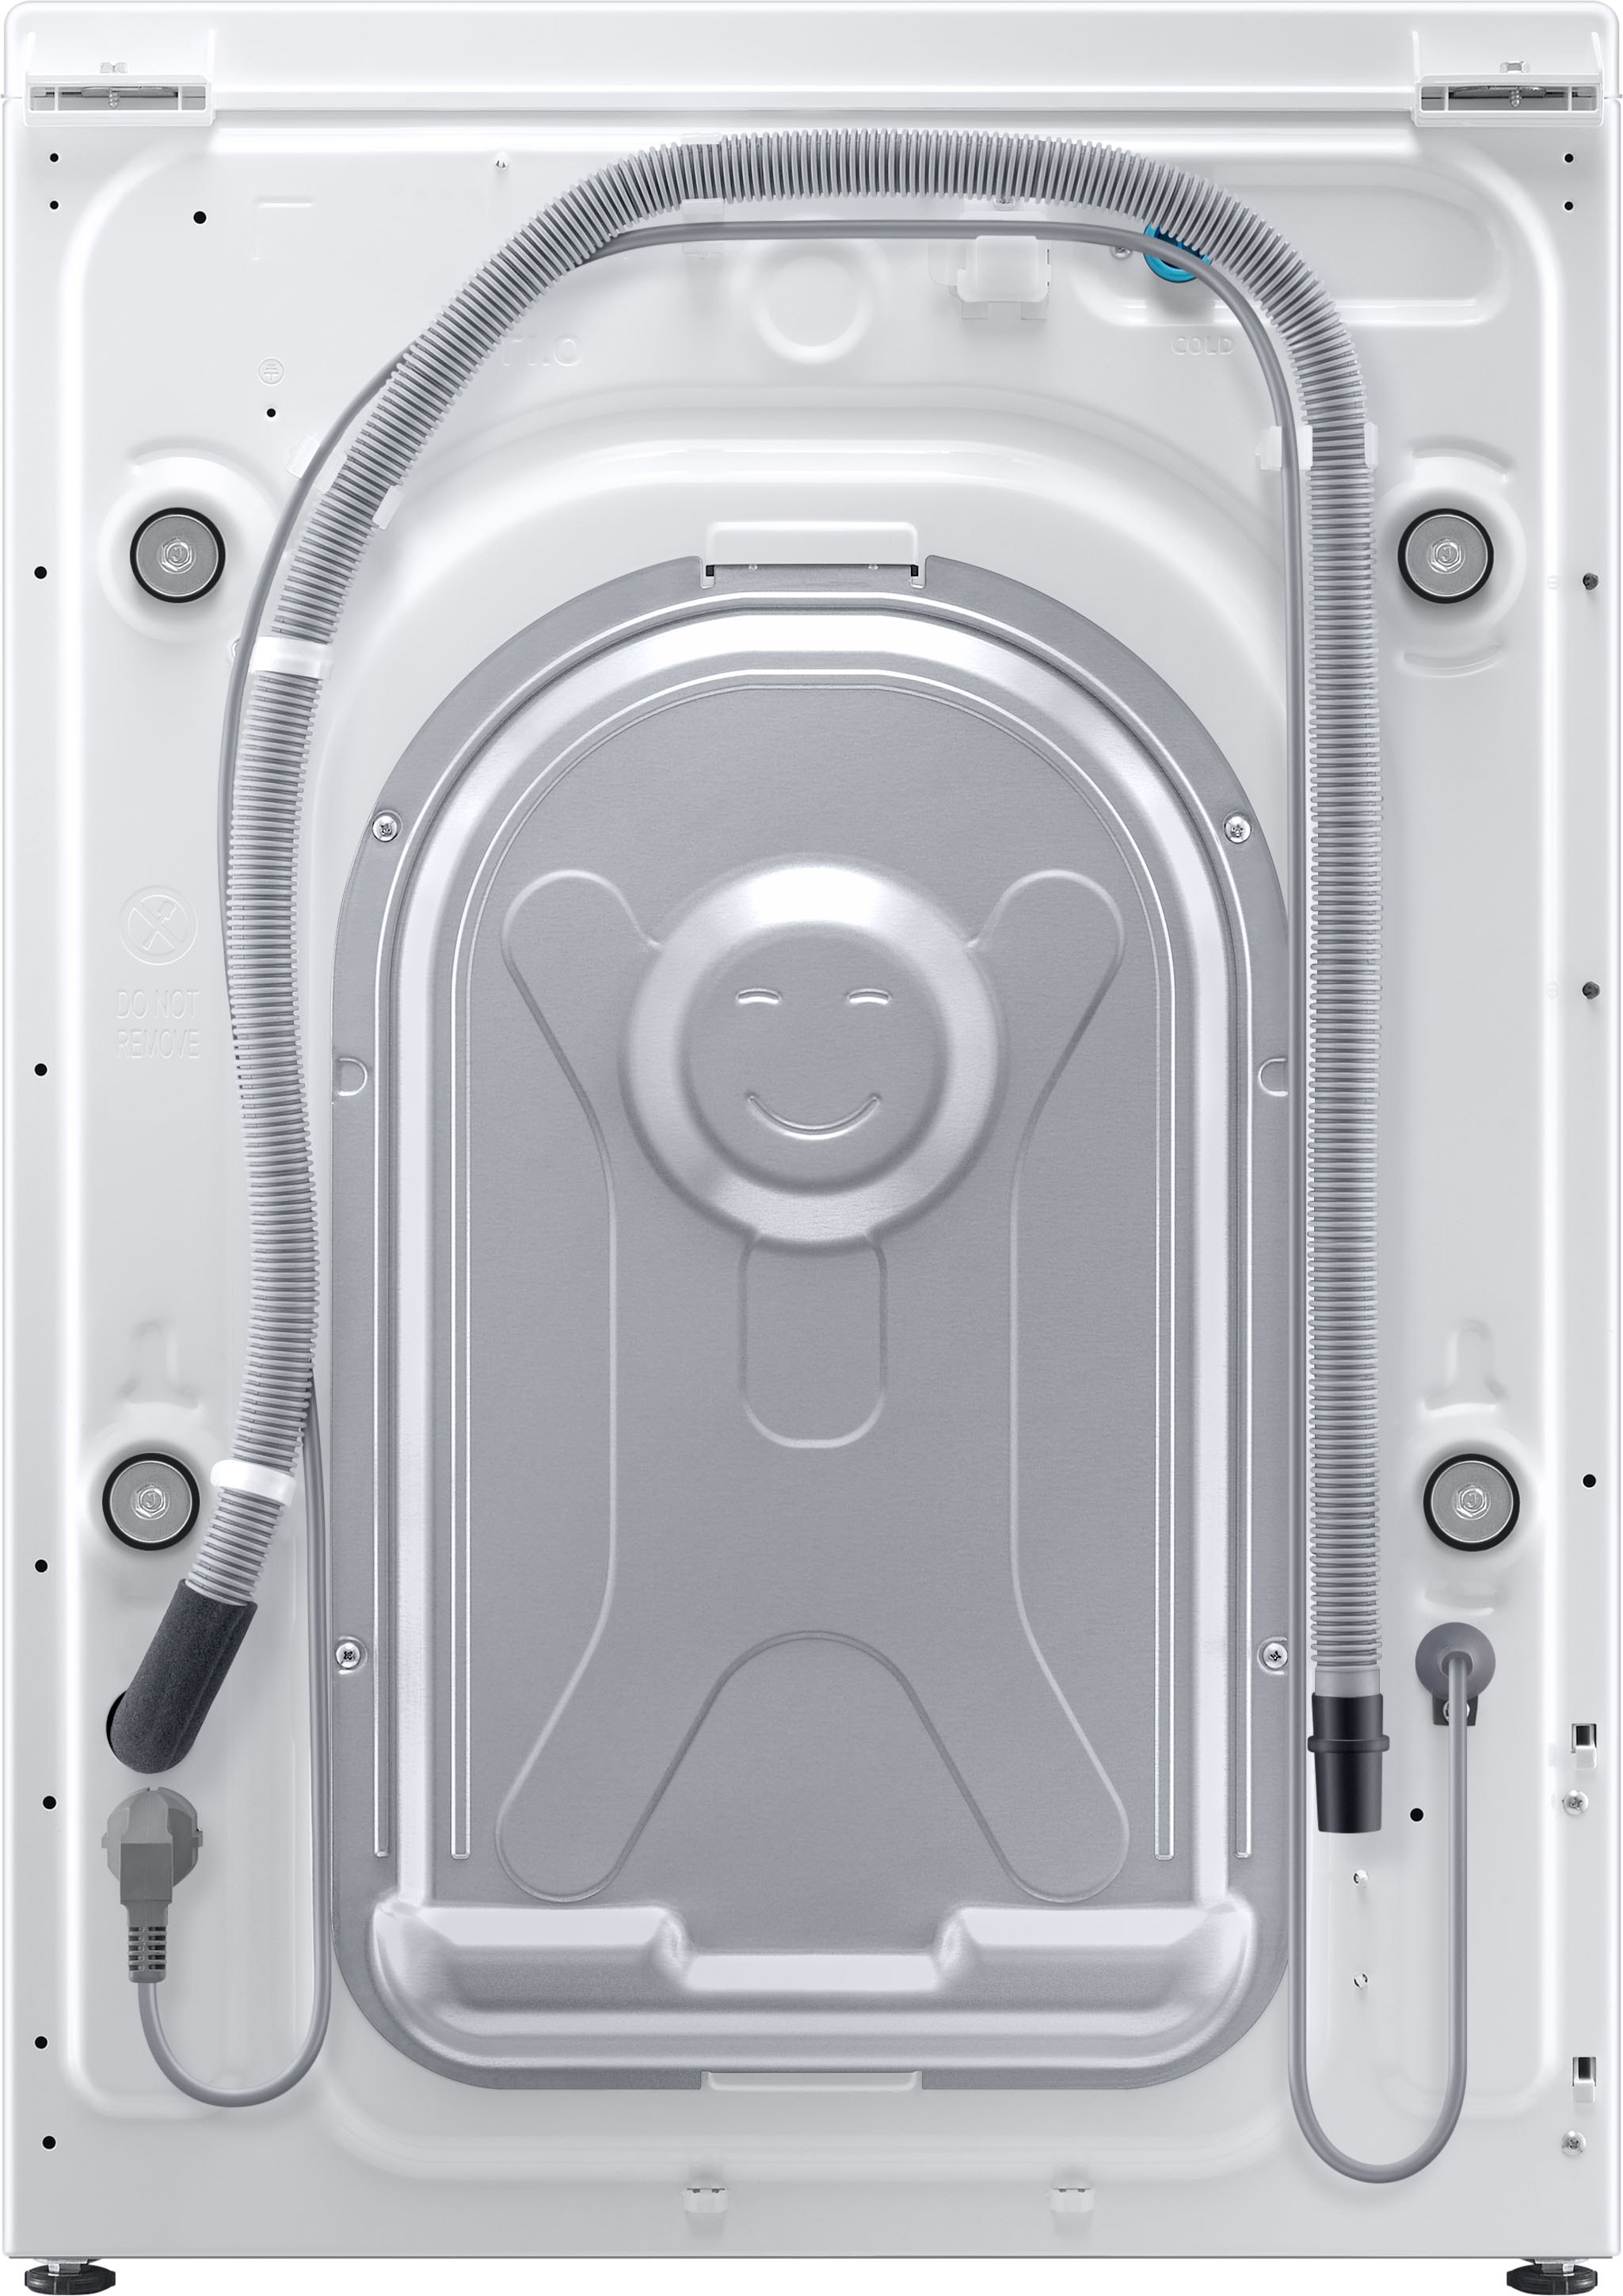 Samsung Waschtrockner »WD91T754ABH«, QuickDrive